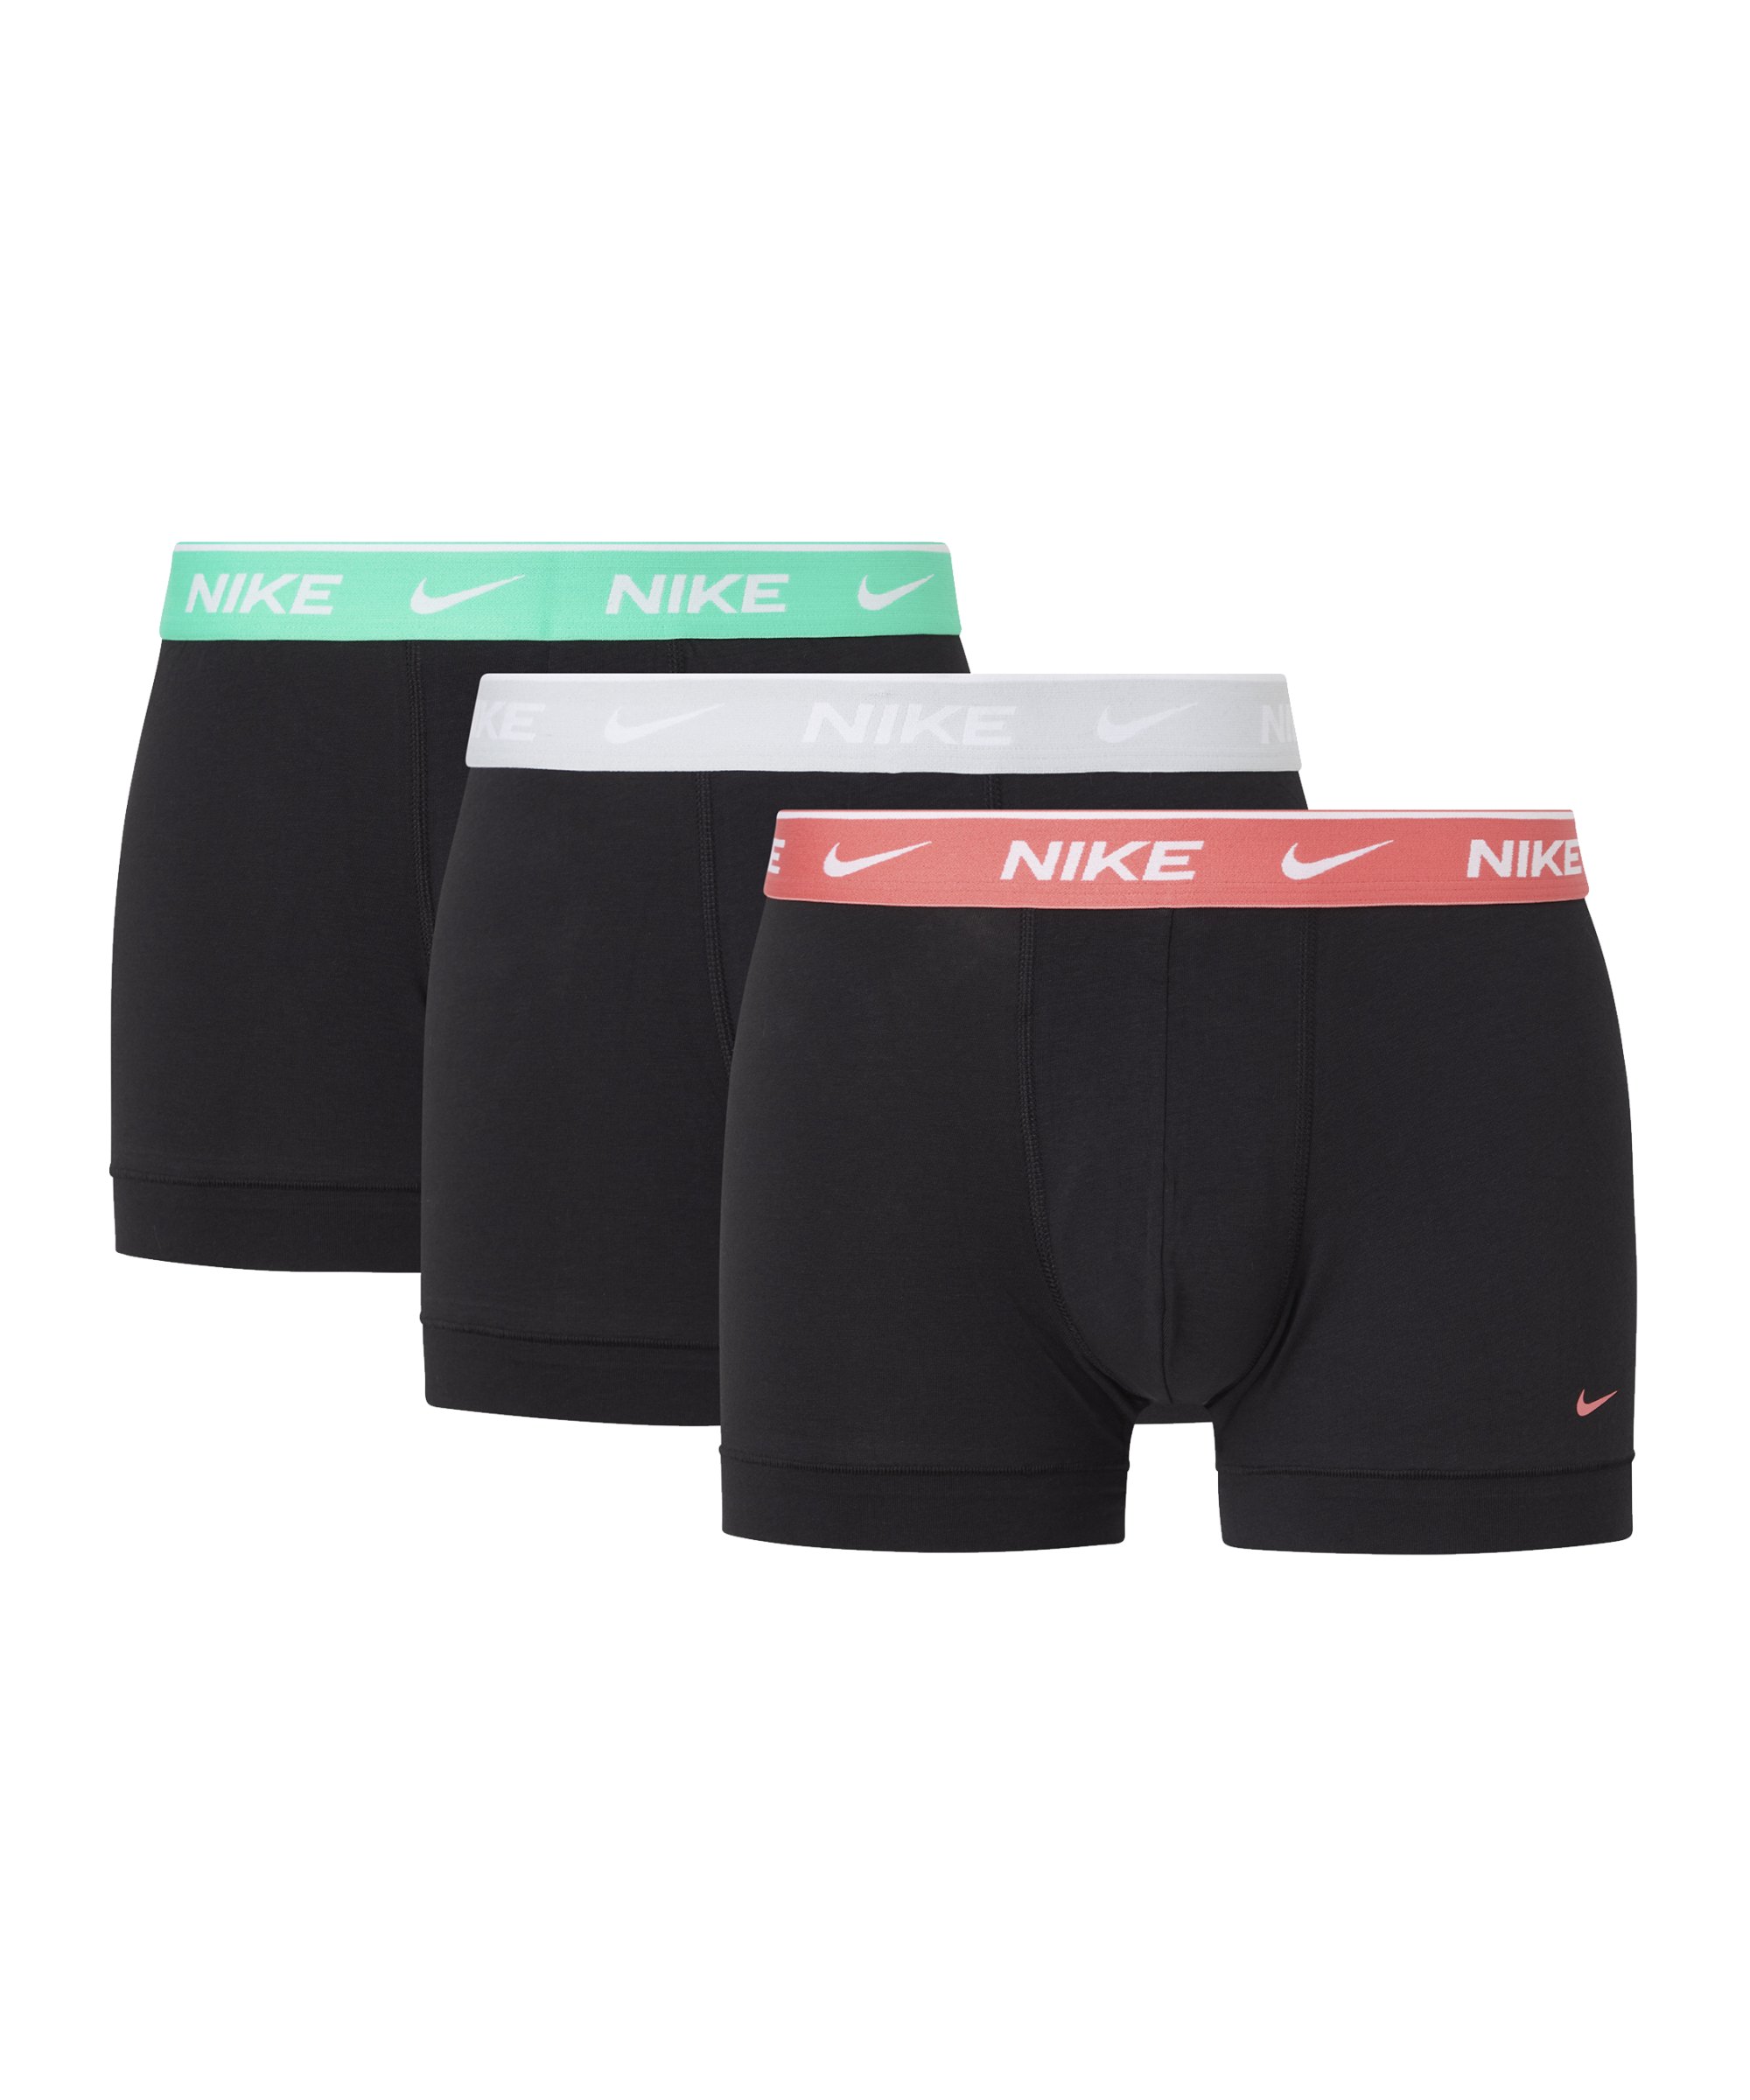 Nike Cotton Trunk Boxershort 3er Pack Schwarz FAN3 - schwarz